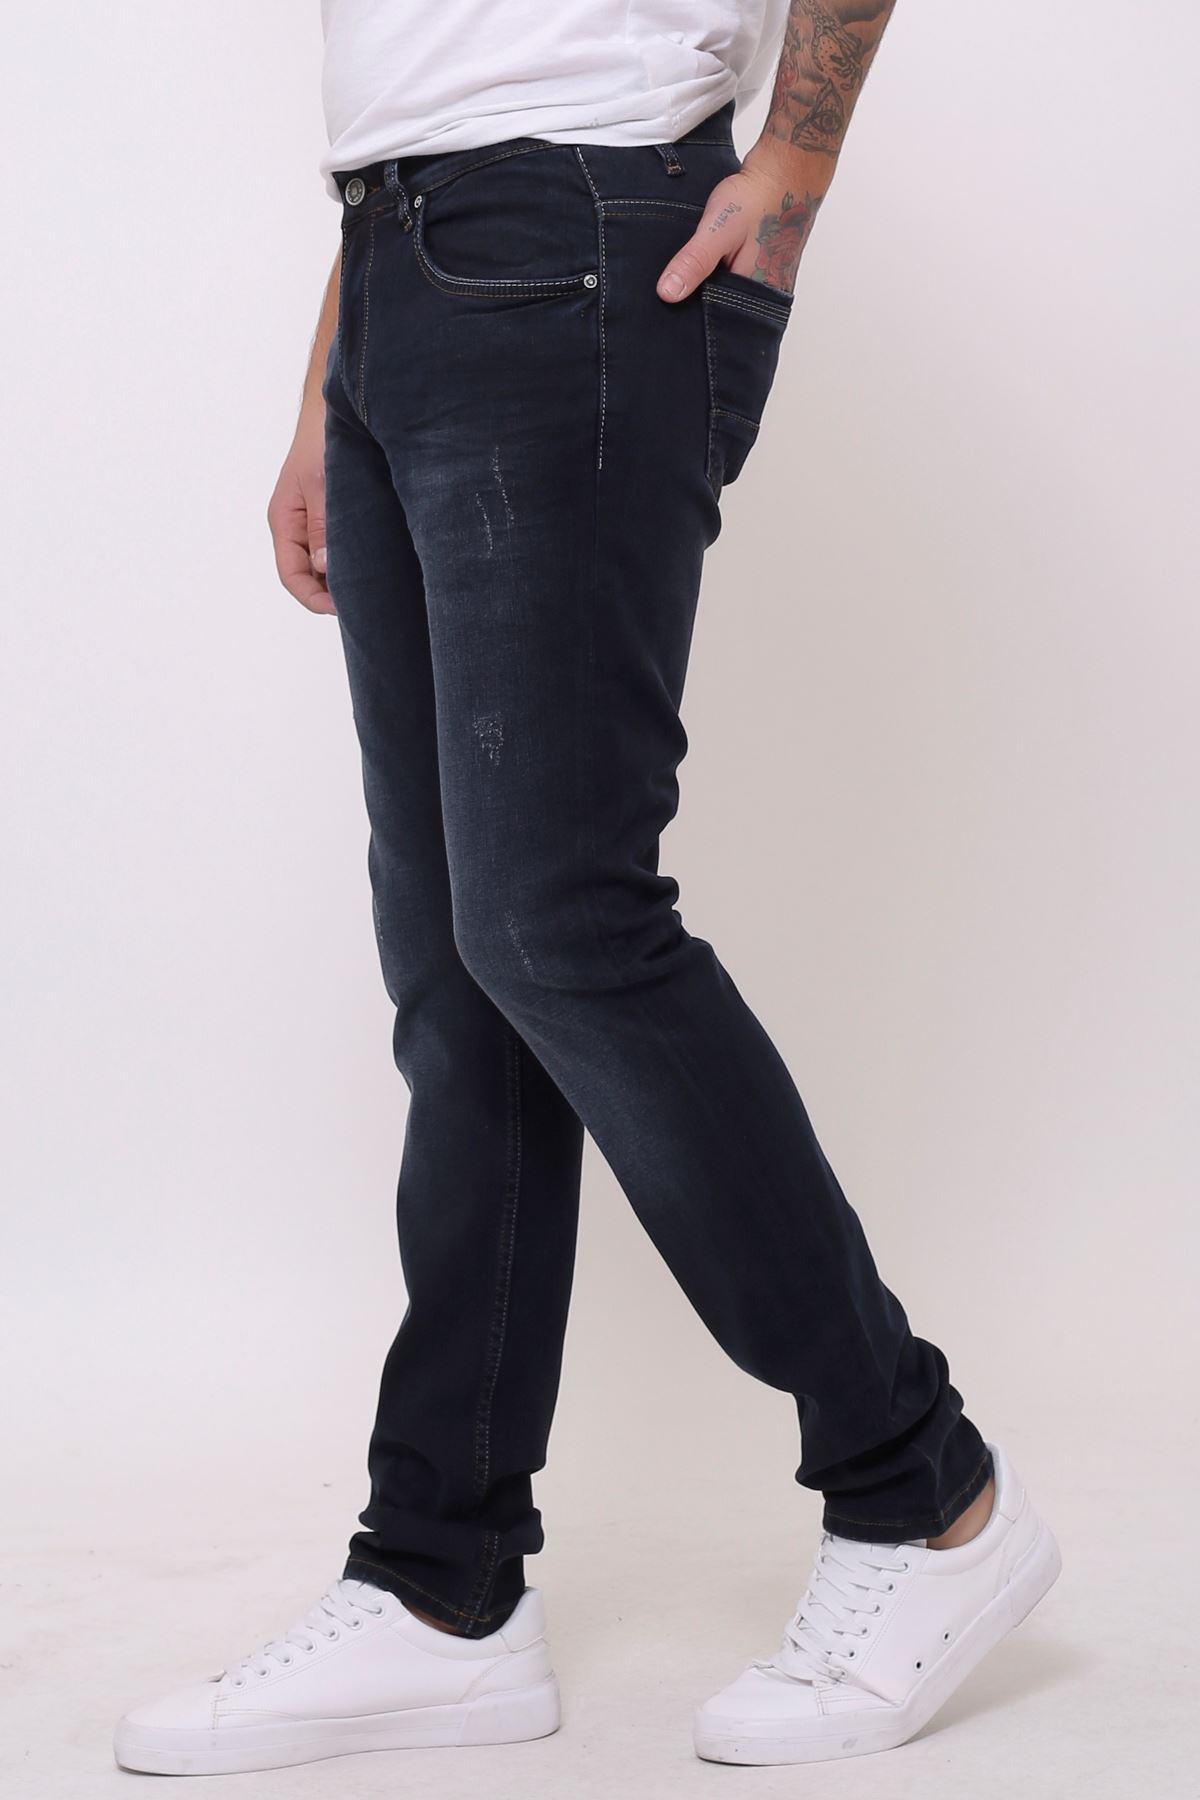 Yeni Blue Black Slim Fit Fermuarlı Erkek Jeans Pantolon